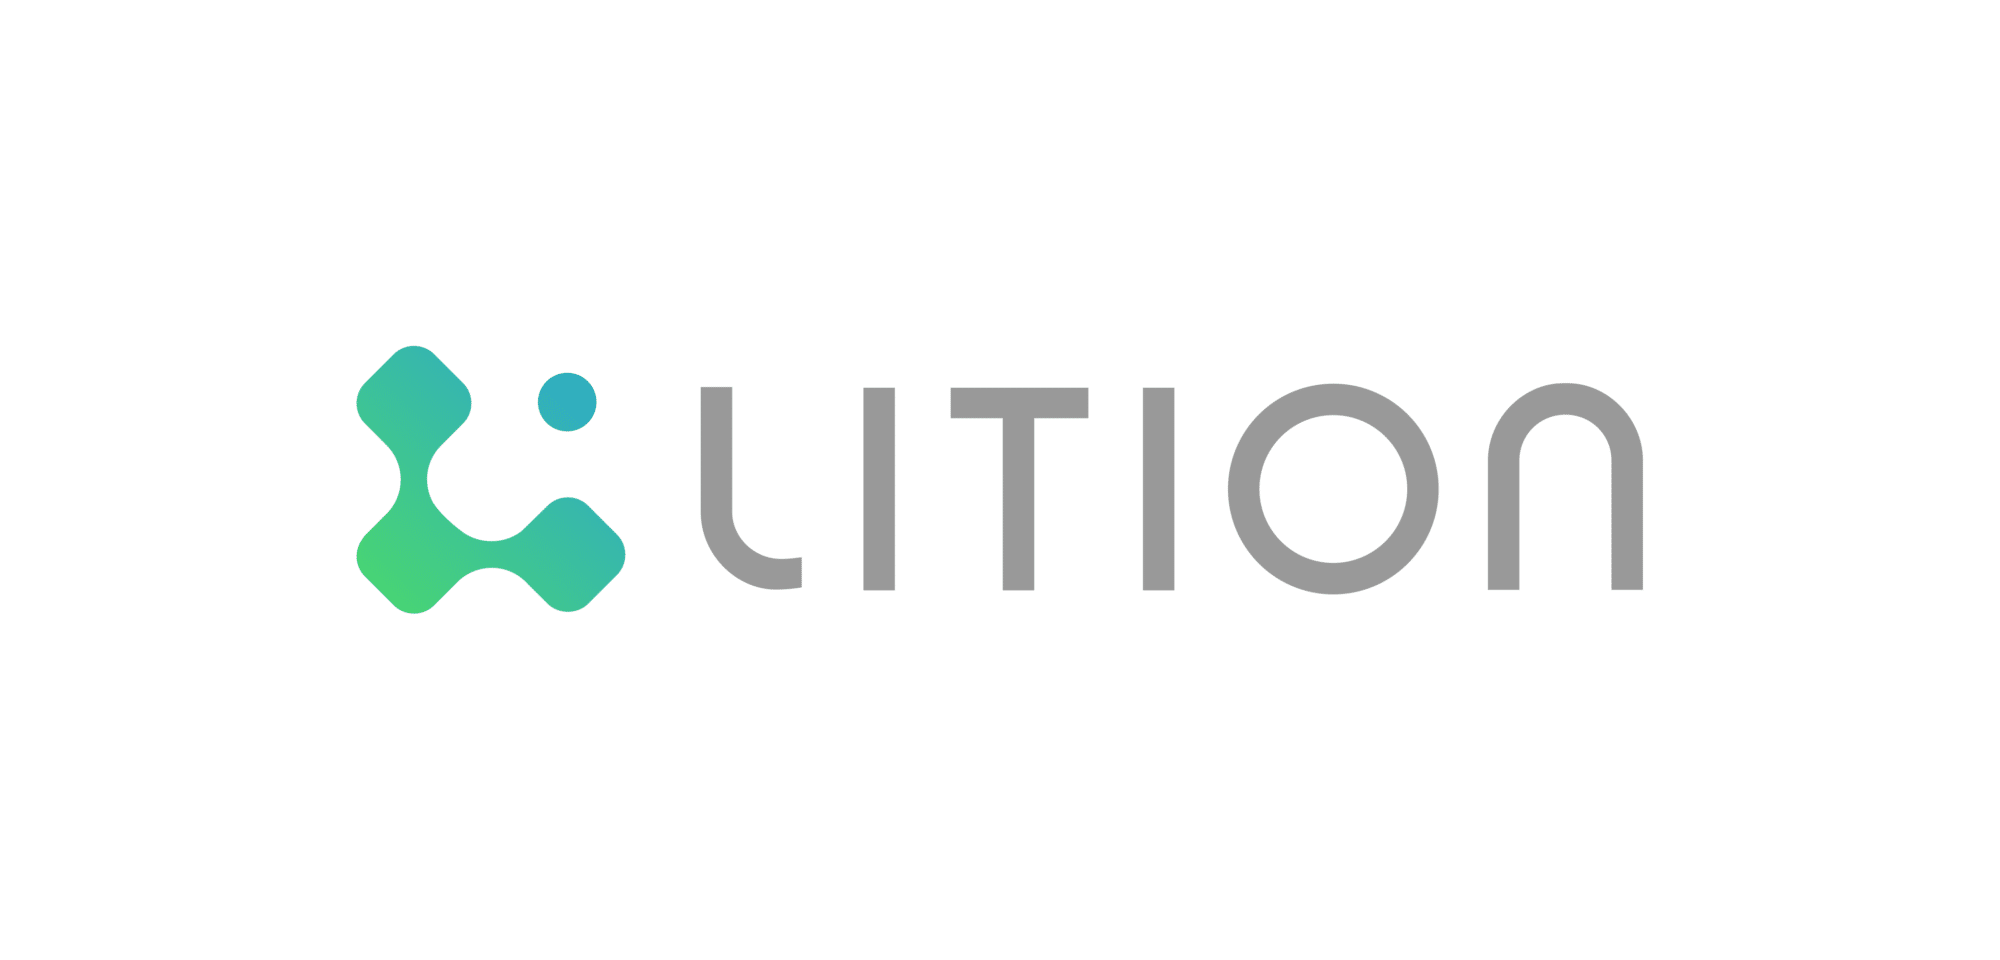 Lition Logo